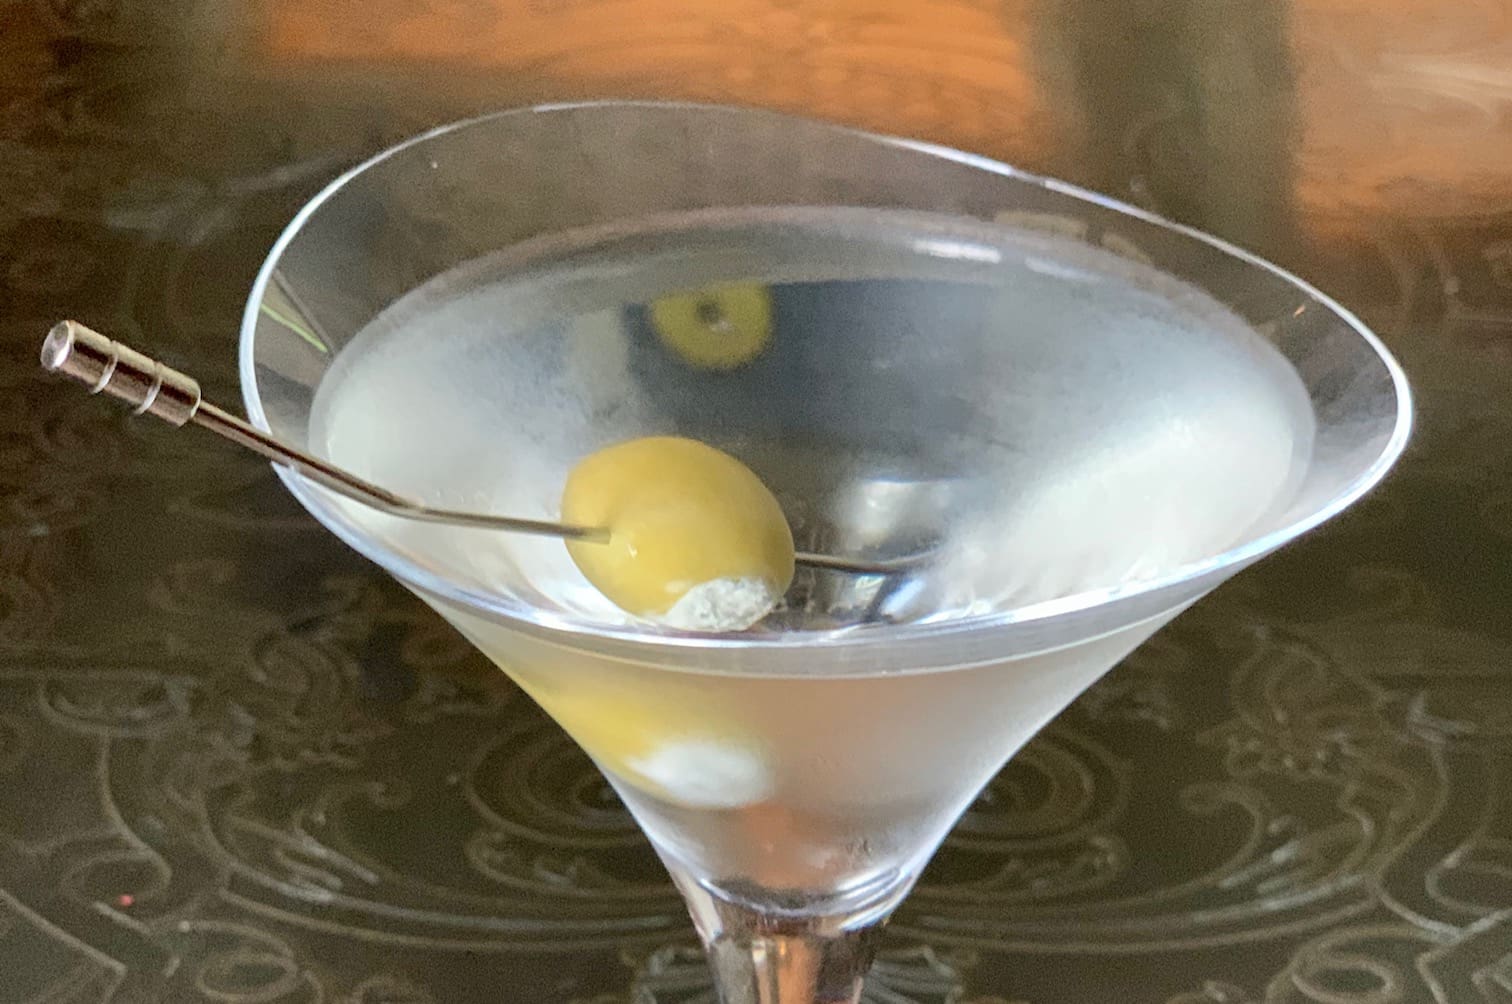 Martini main